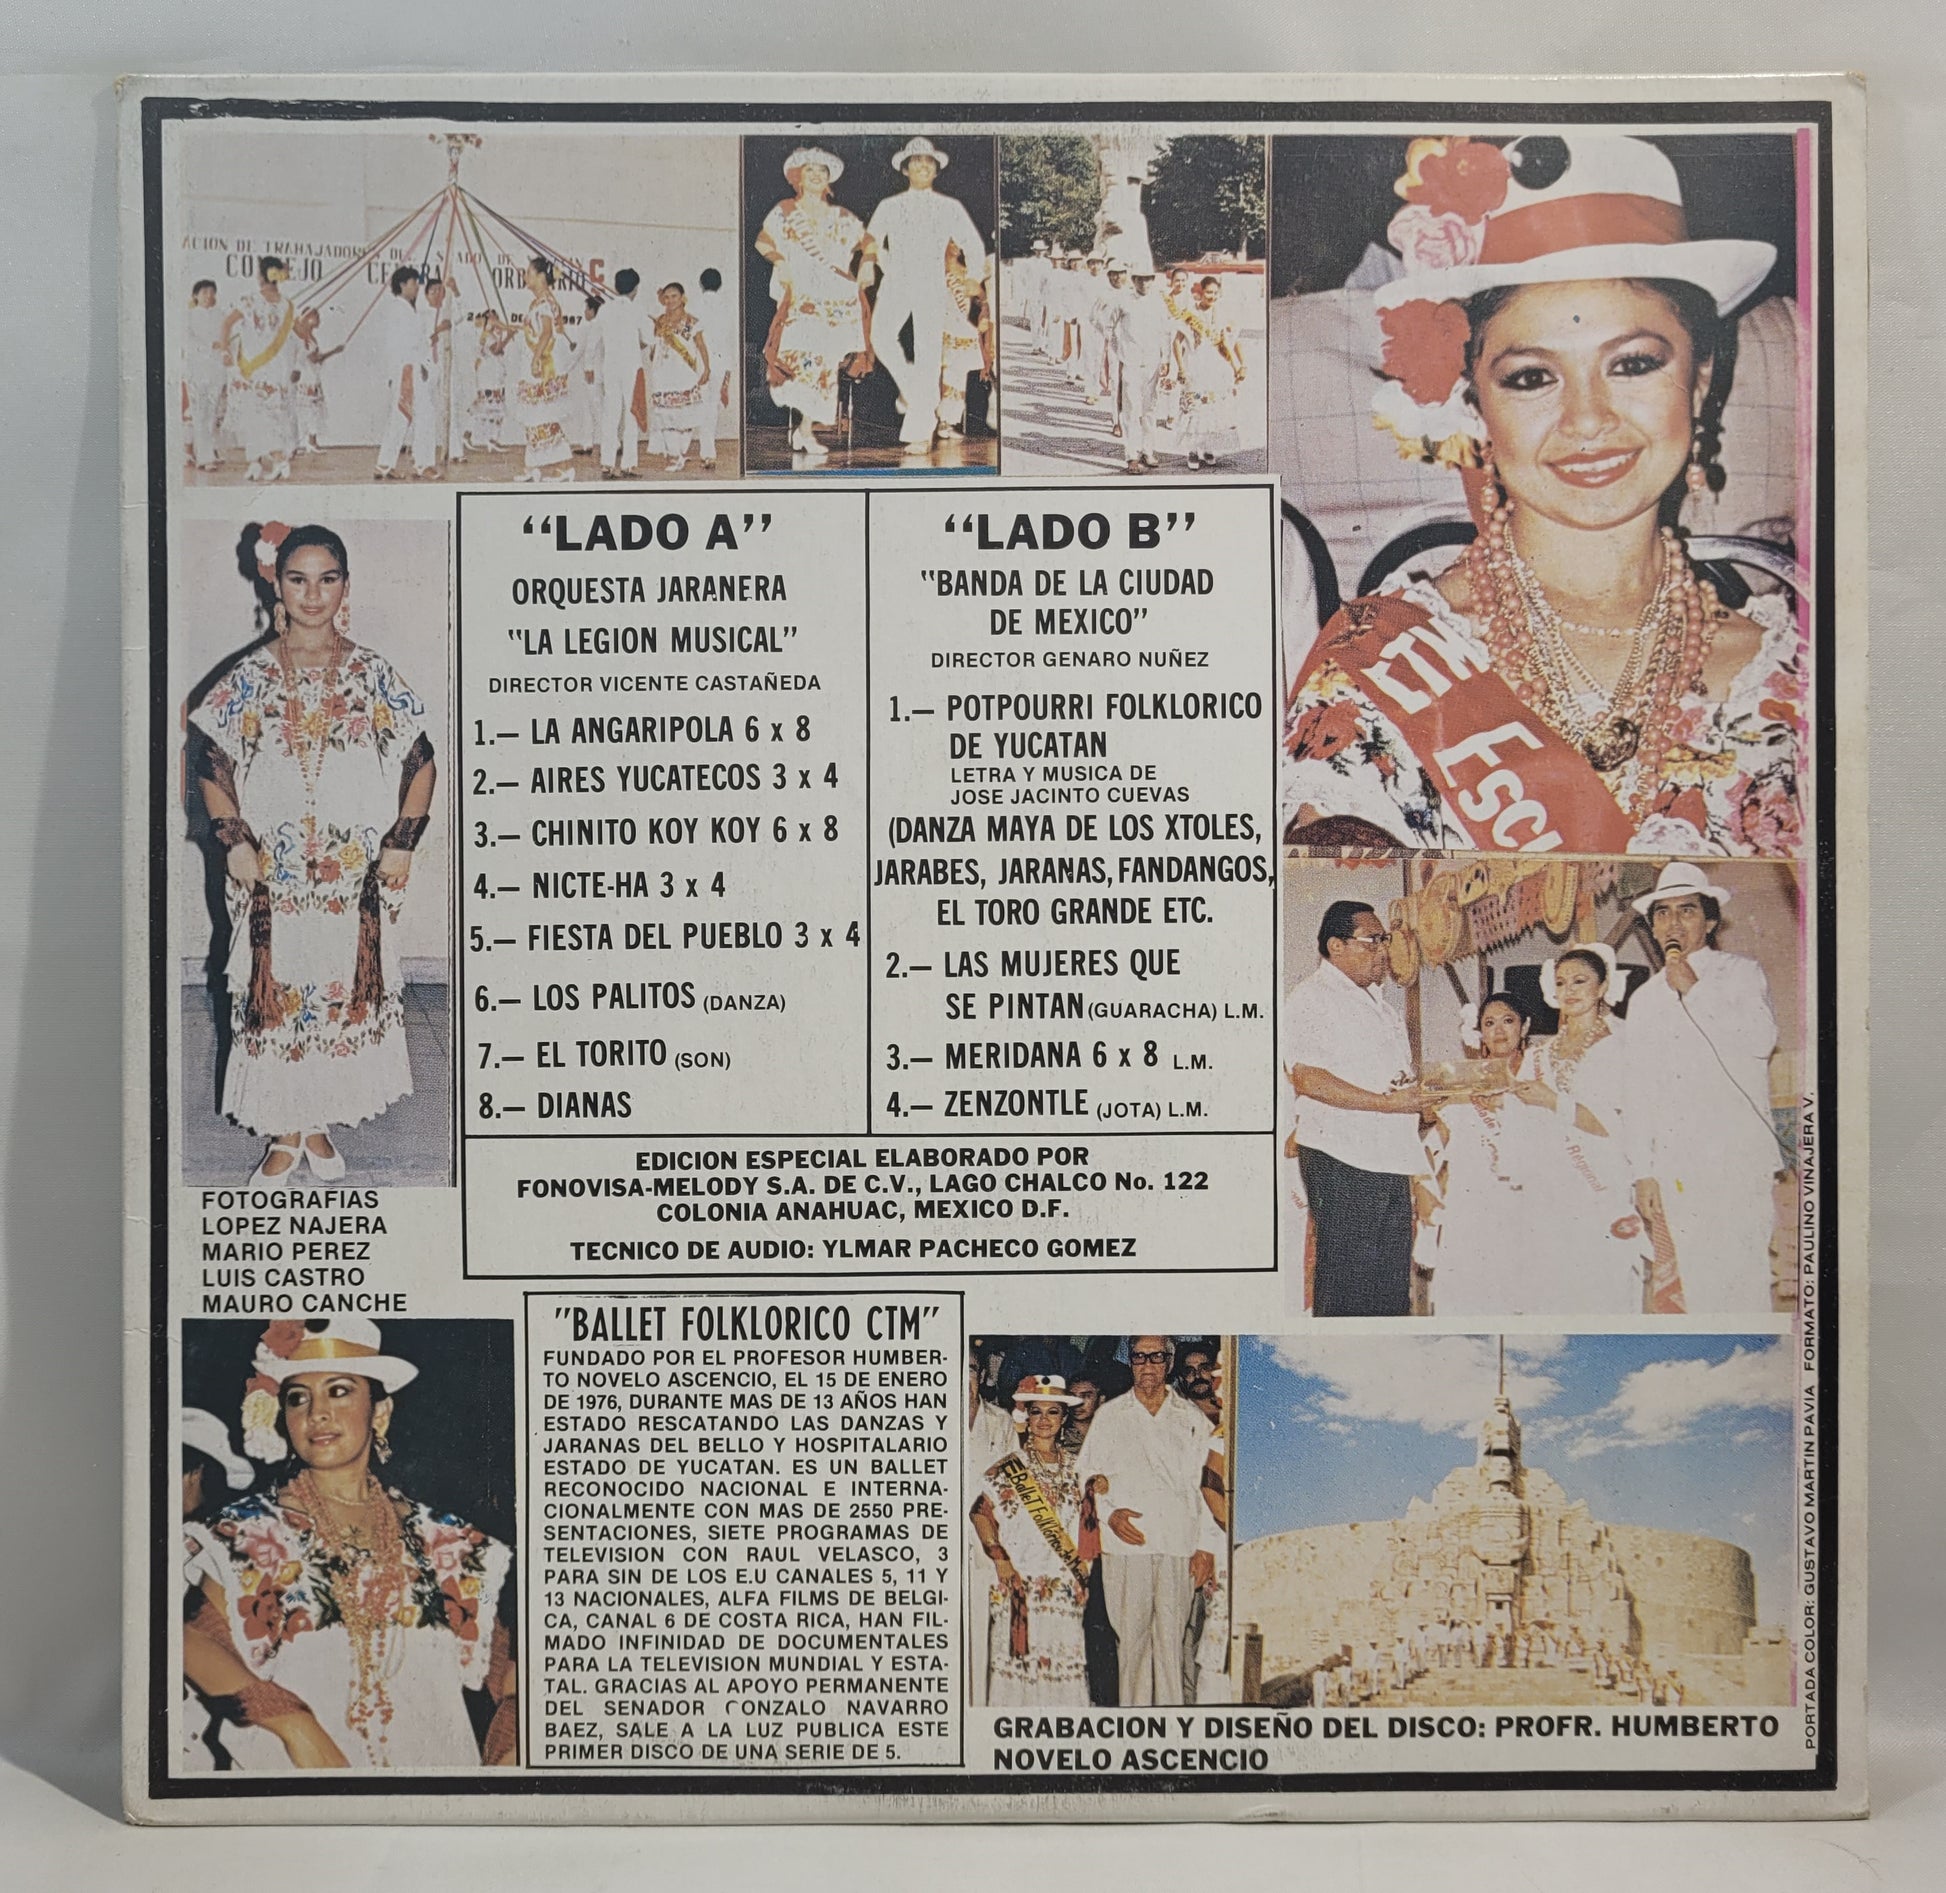 Ballet Kolklorico CTM [Vinyl Record LP]